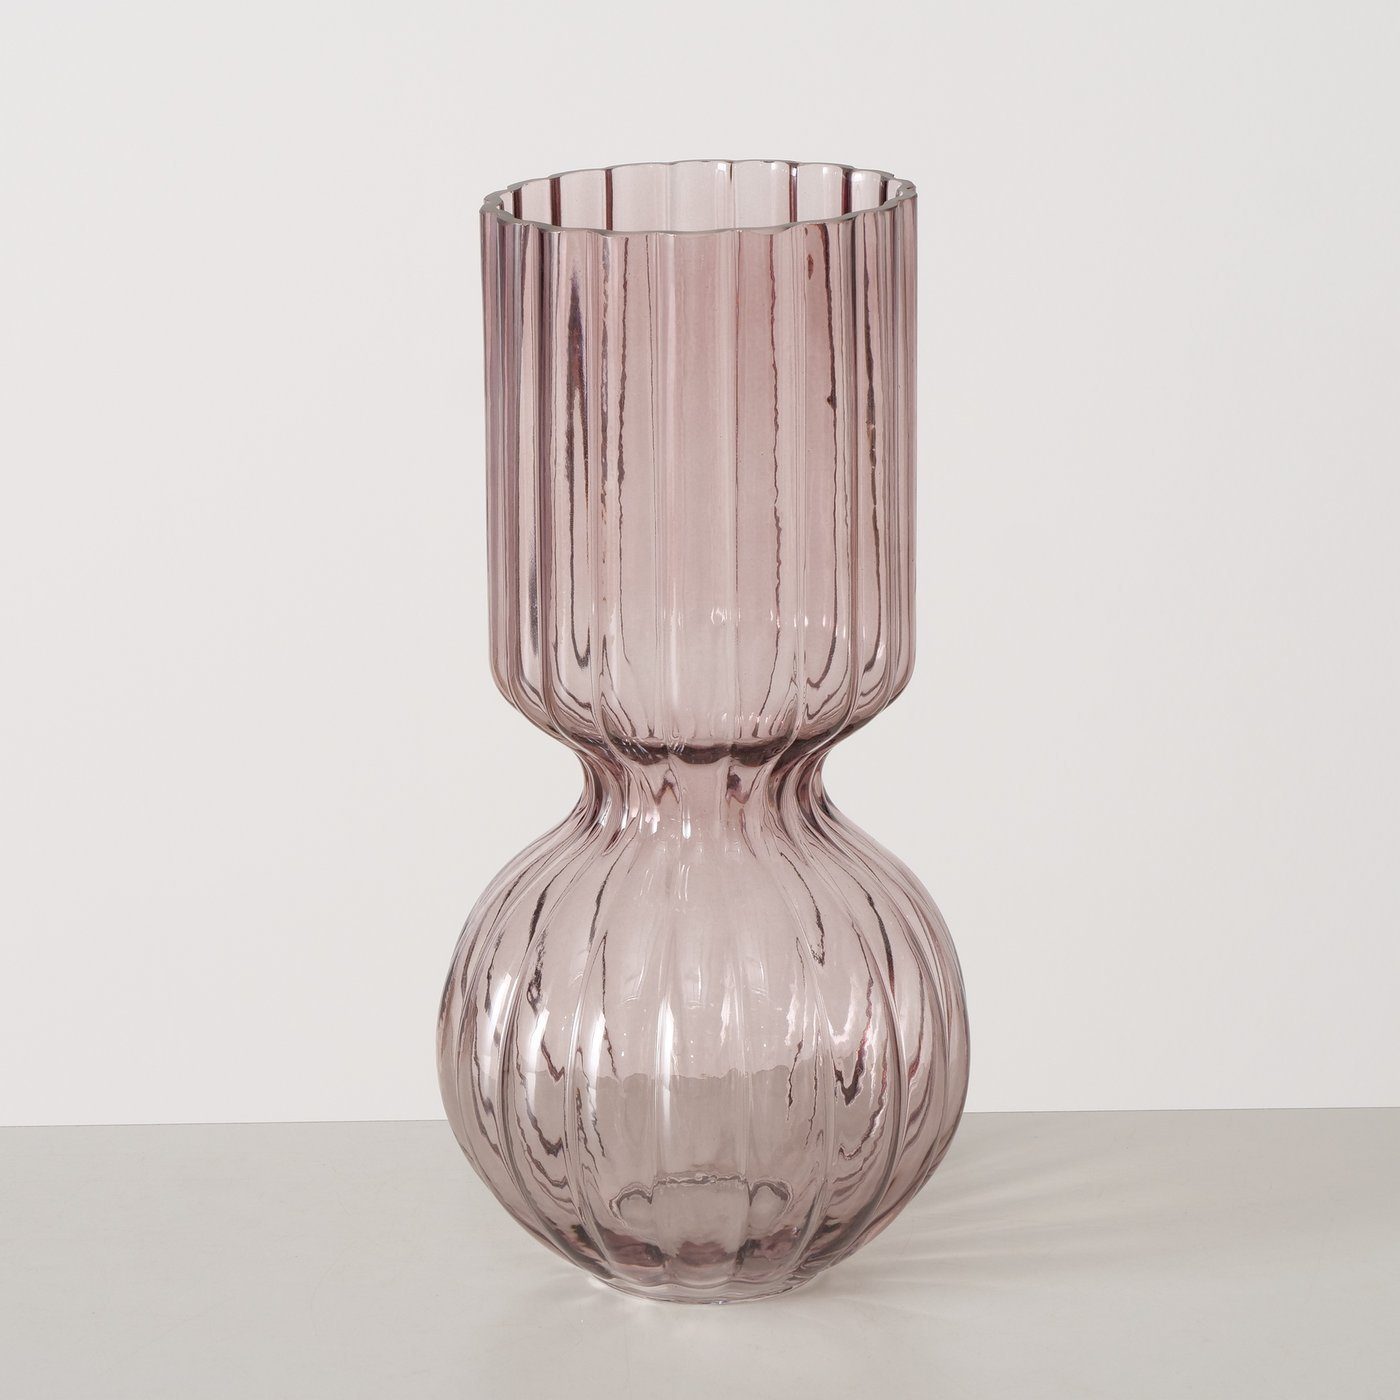 BOLTZE Dekovase "Kalea" Glas H30cm, in aus Vase dukelrosa